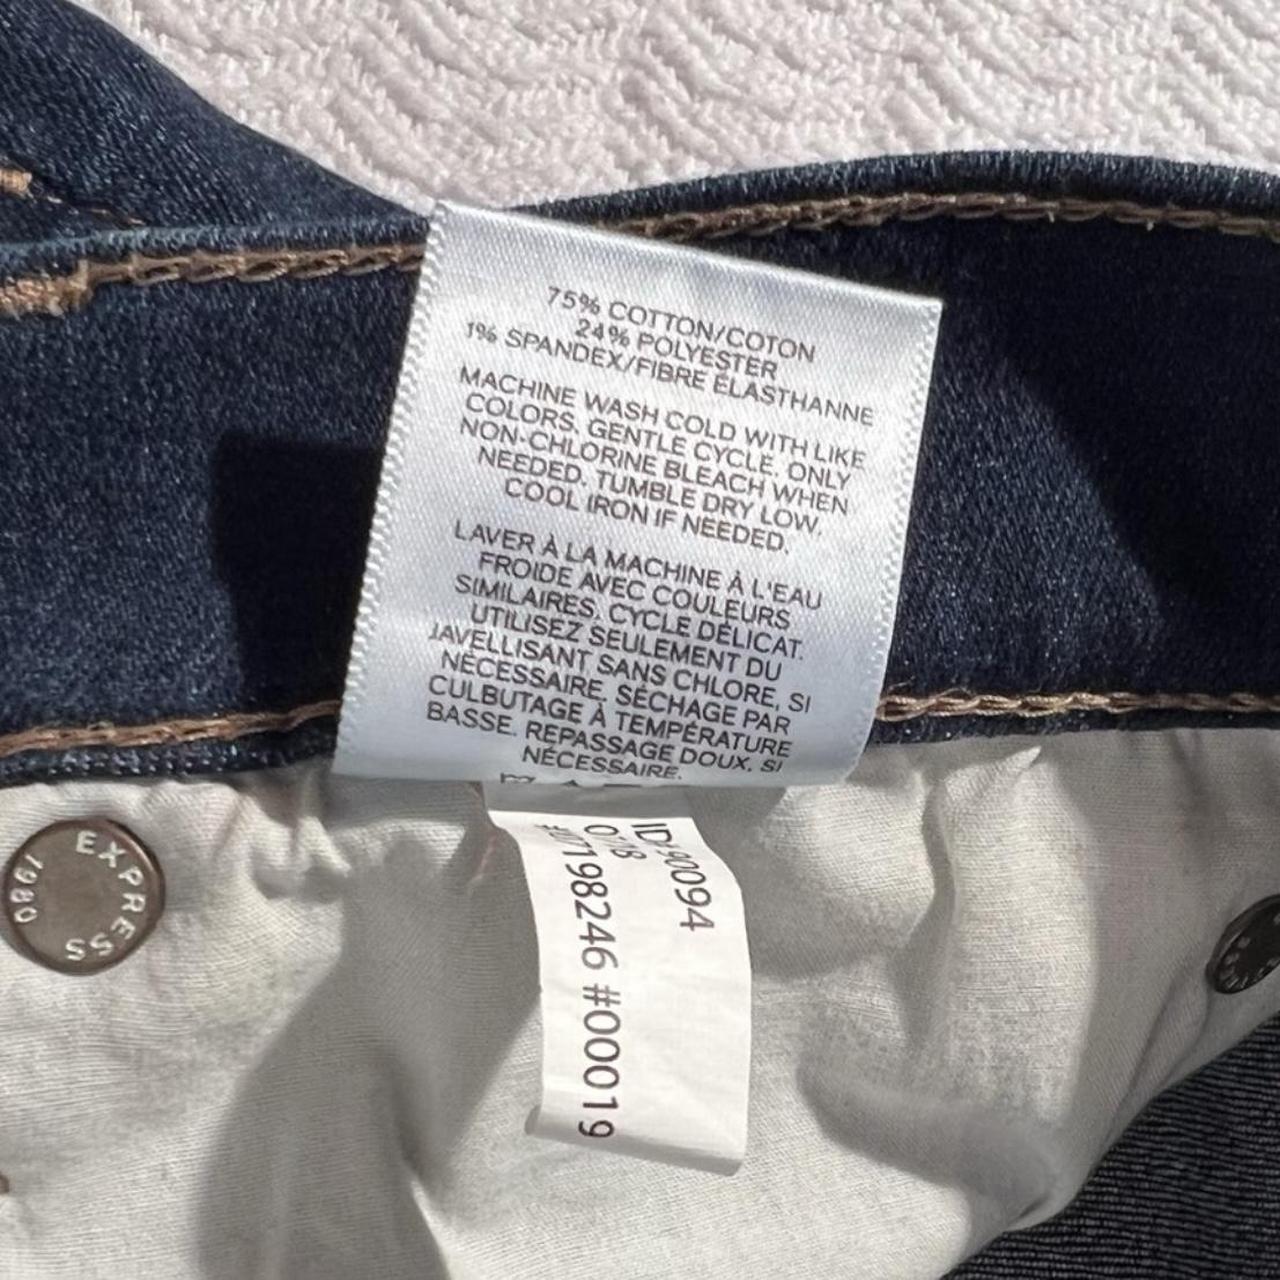 Distressed Express Jeans Denim Size: Women's 16 - Depop